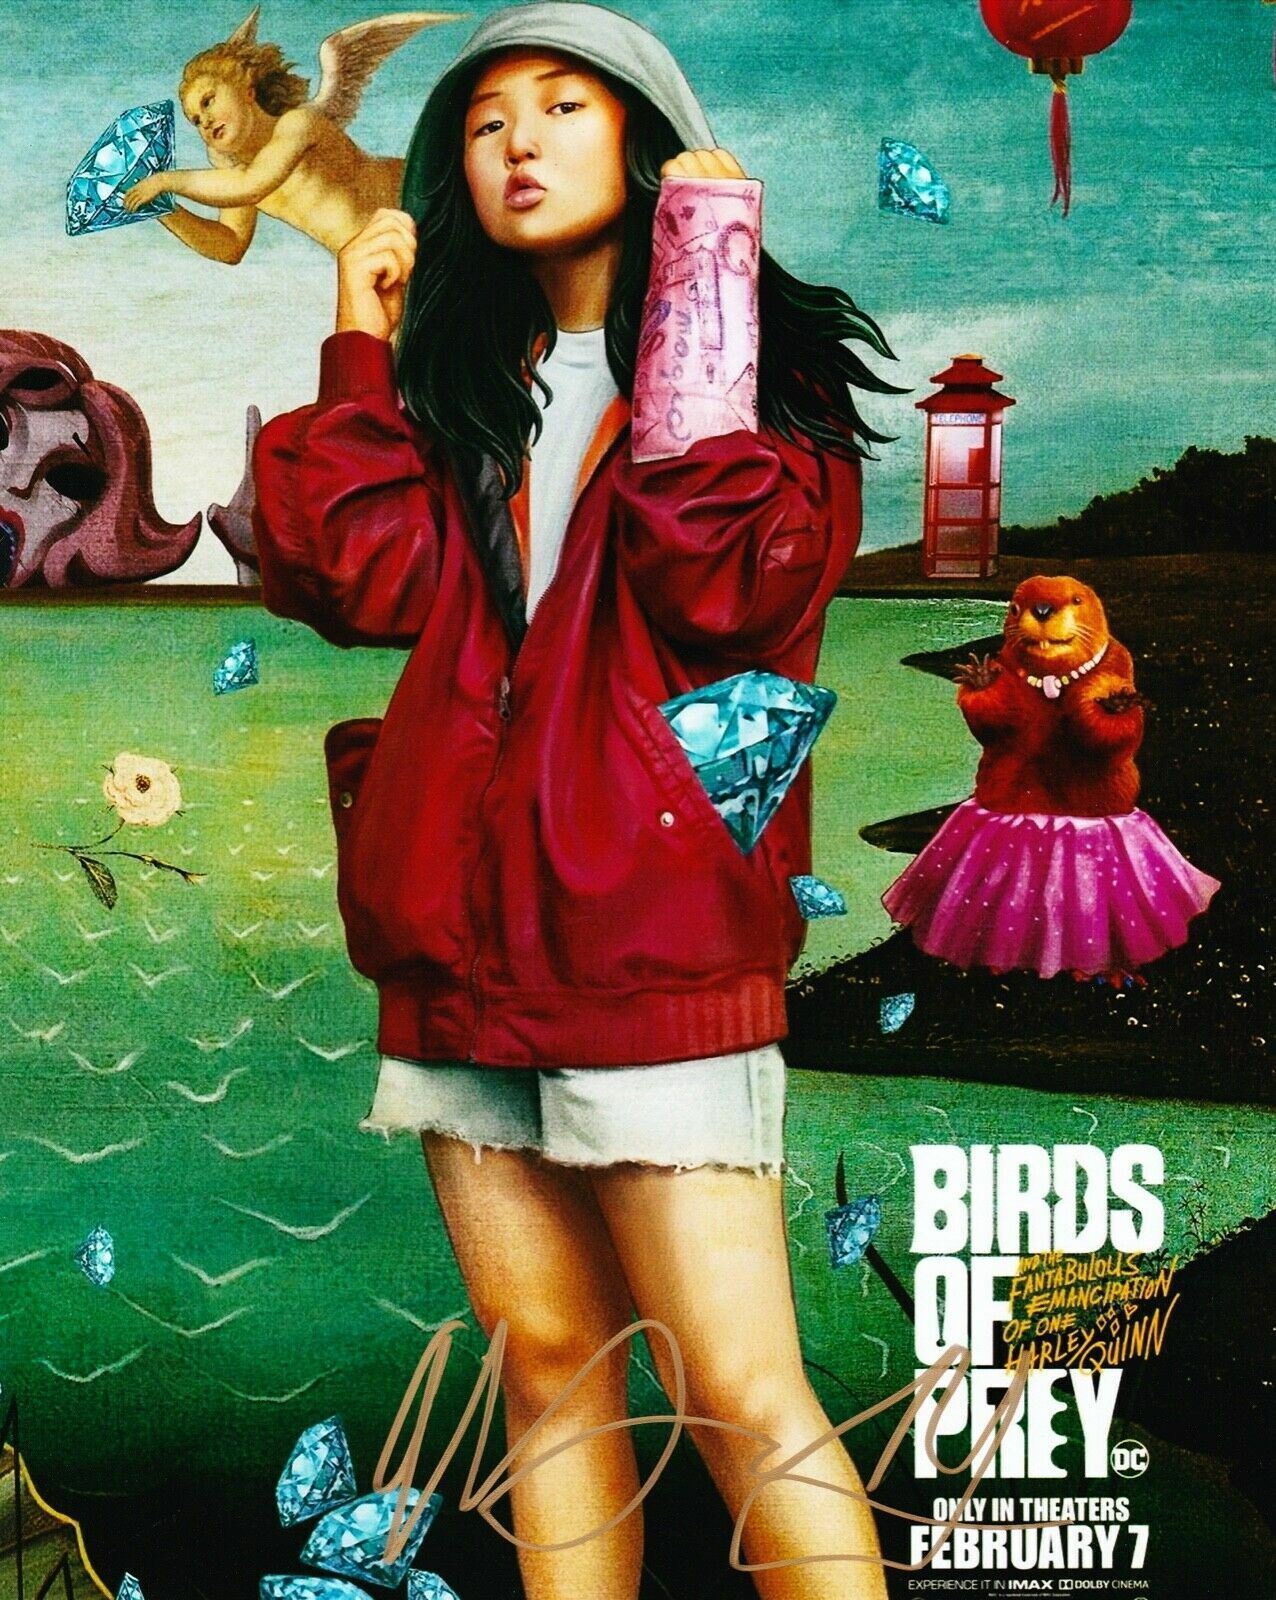 Ella Jay Basco Signed 10X8 Photo Poster painting Birds of Prey Genuine Signature AFTAL COA (A)